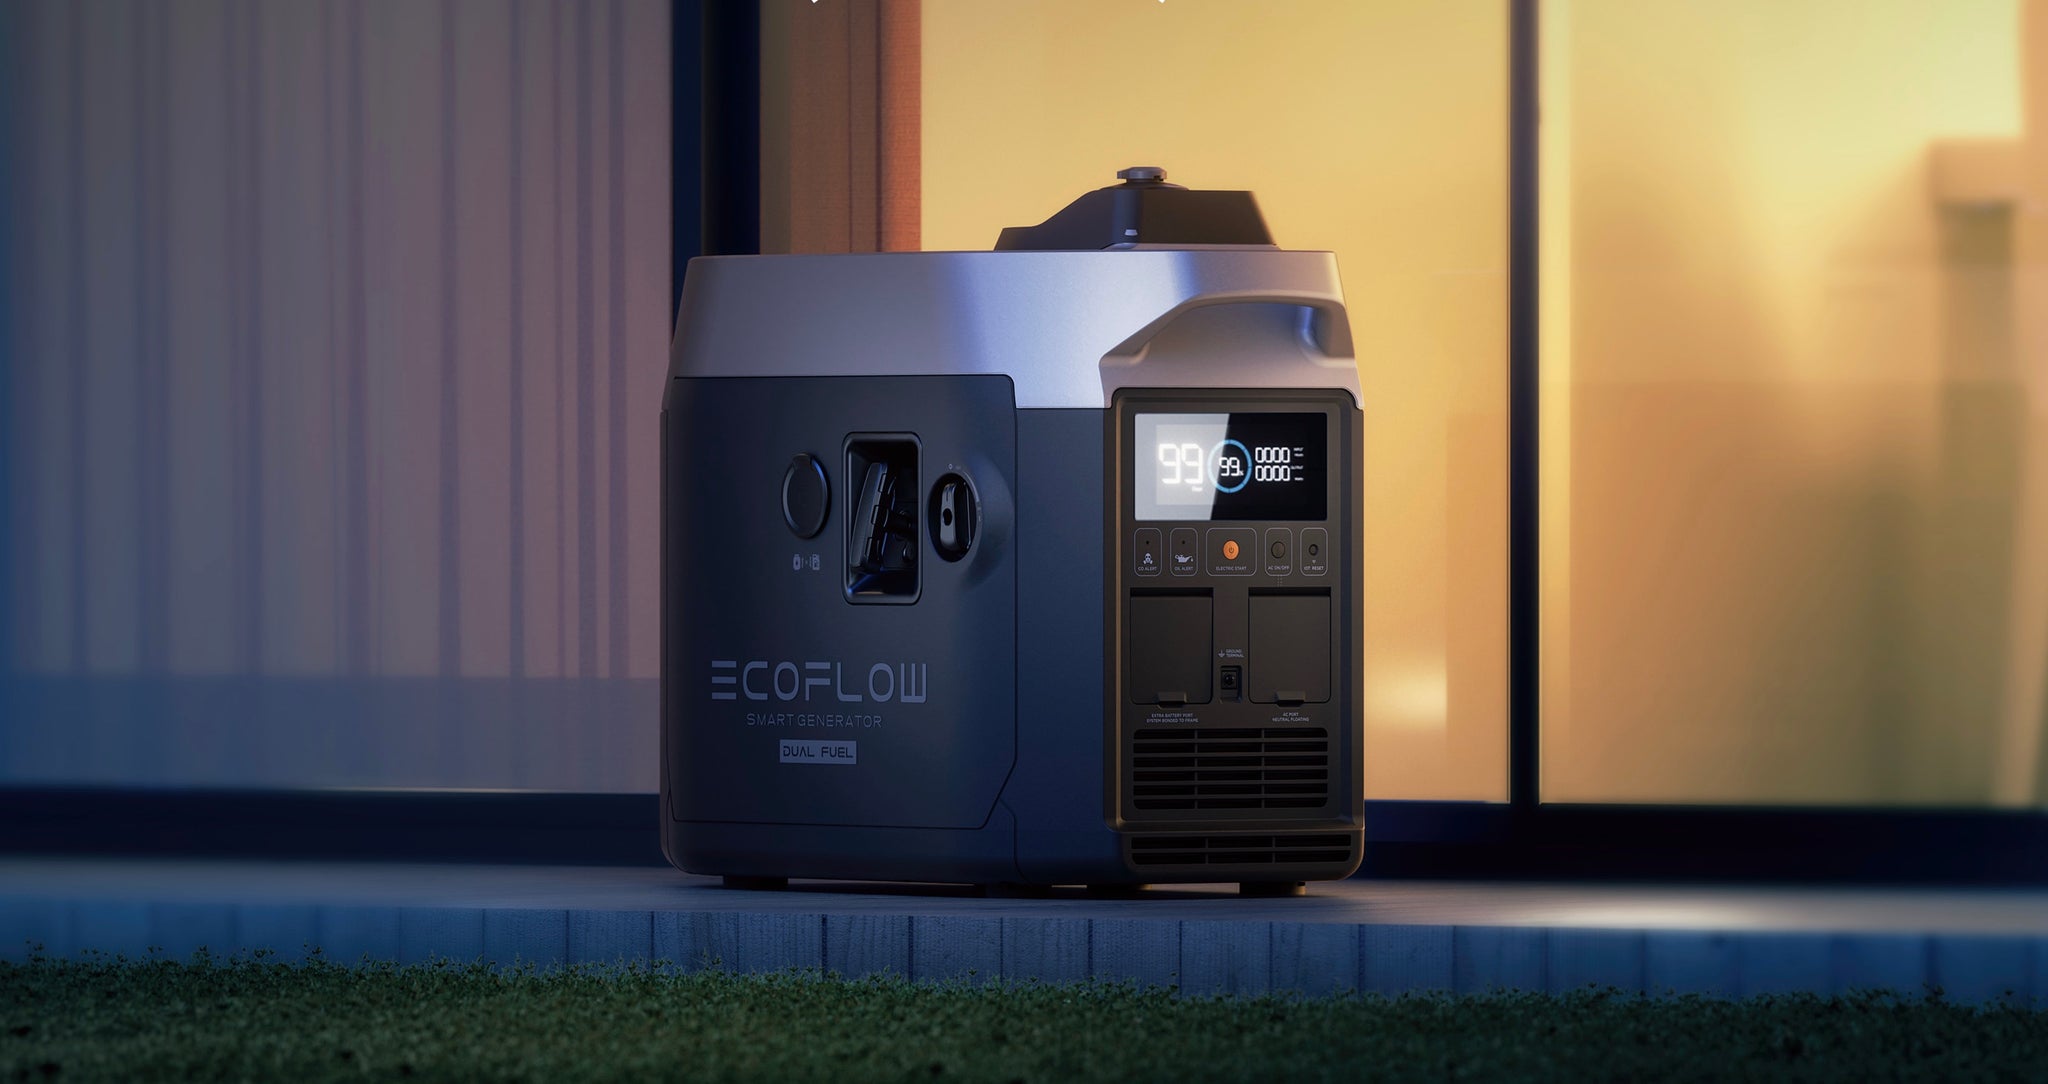 EcoFlow Smart Generator (Dual Fuel) - EcoFlow Power Systems